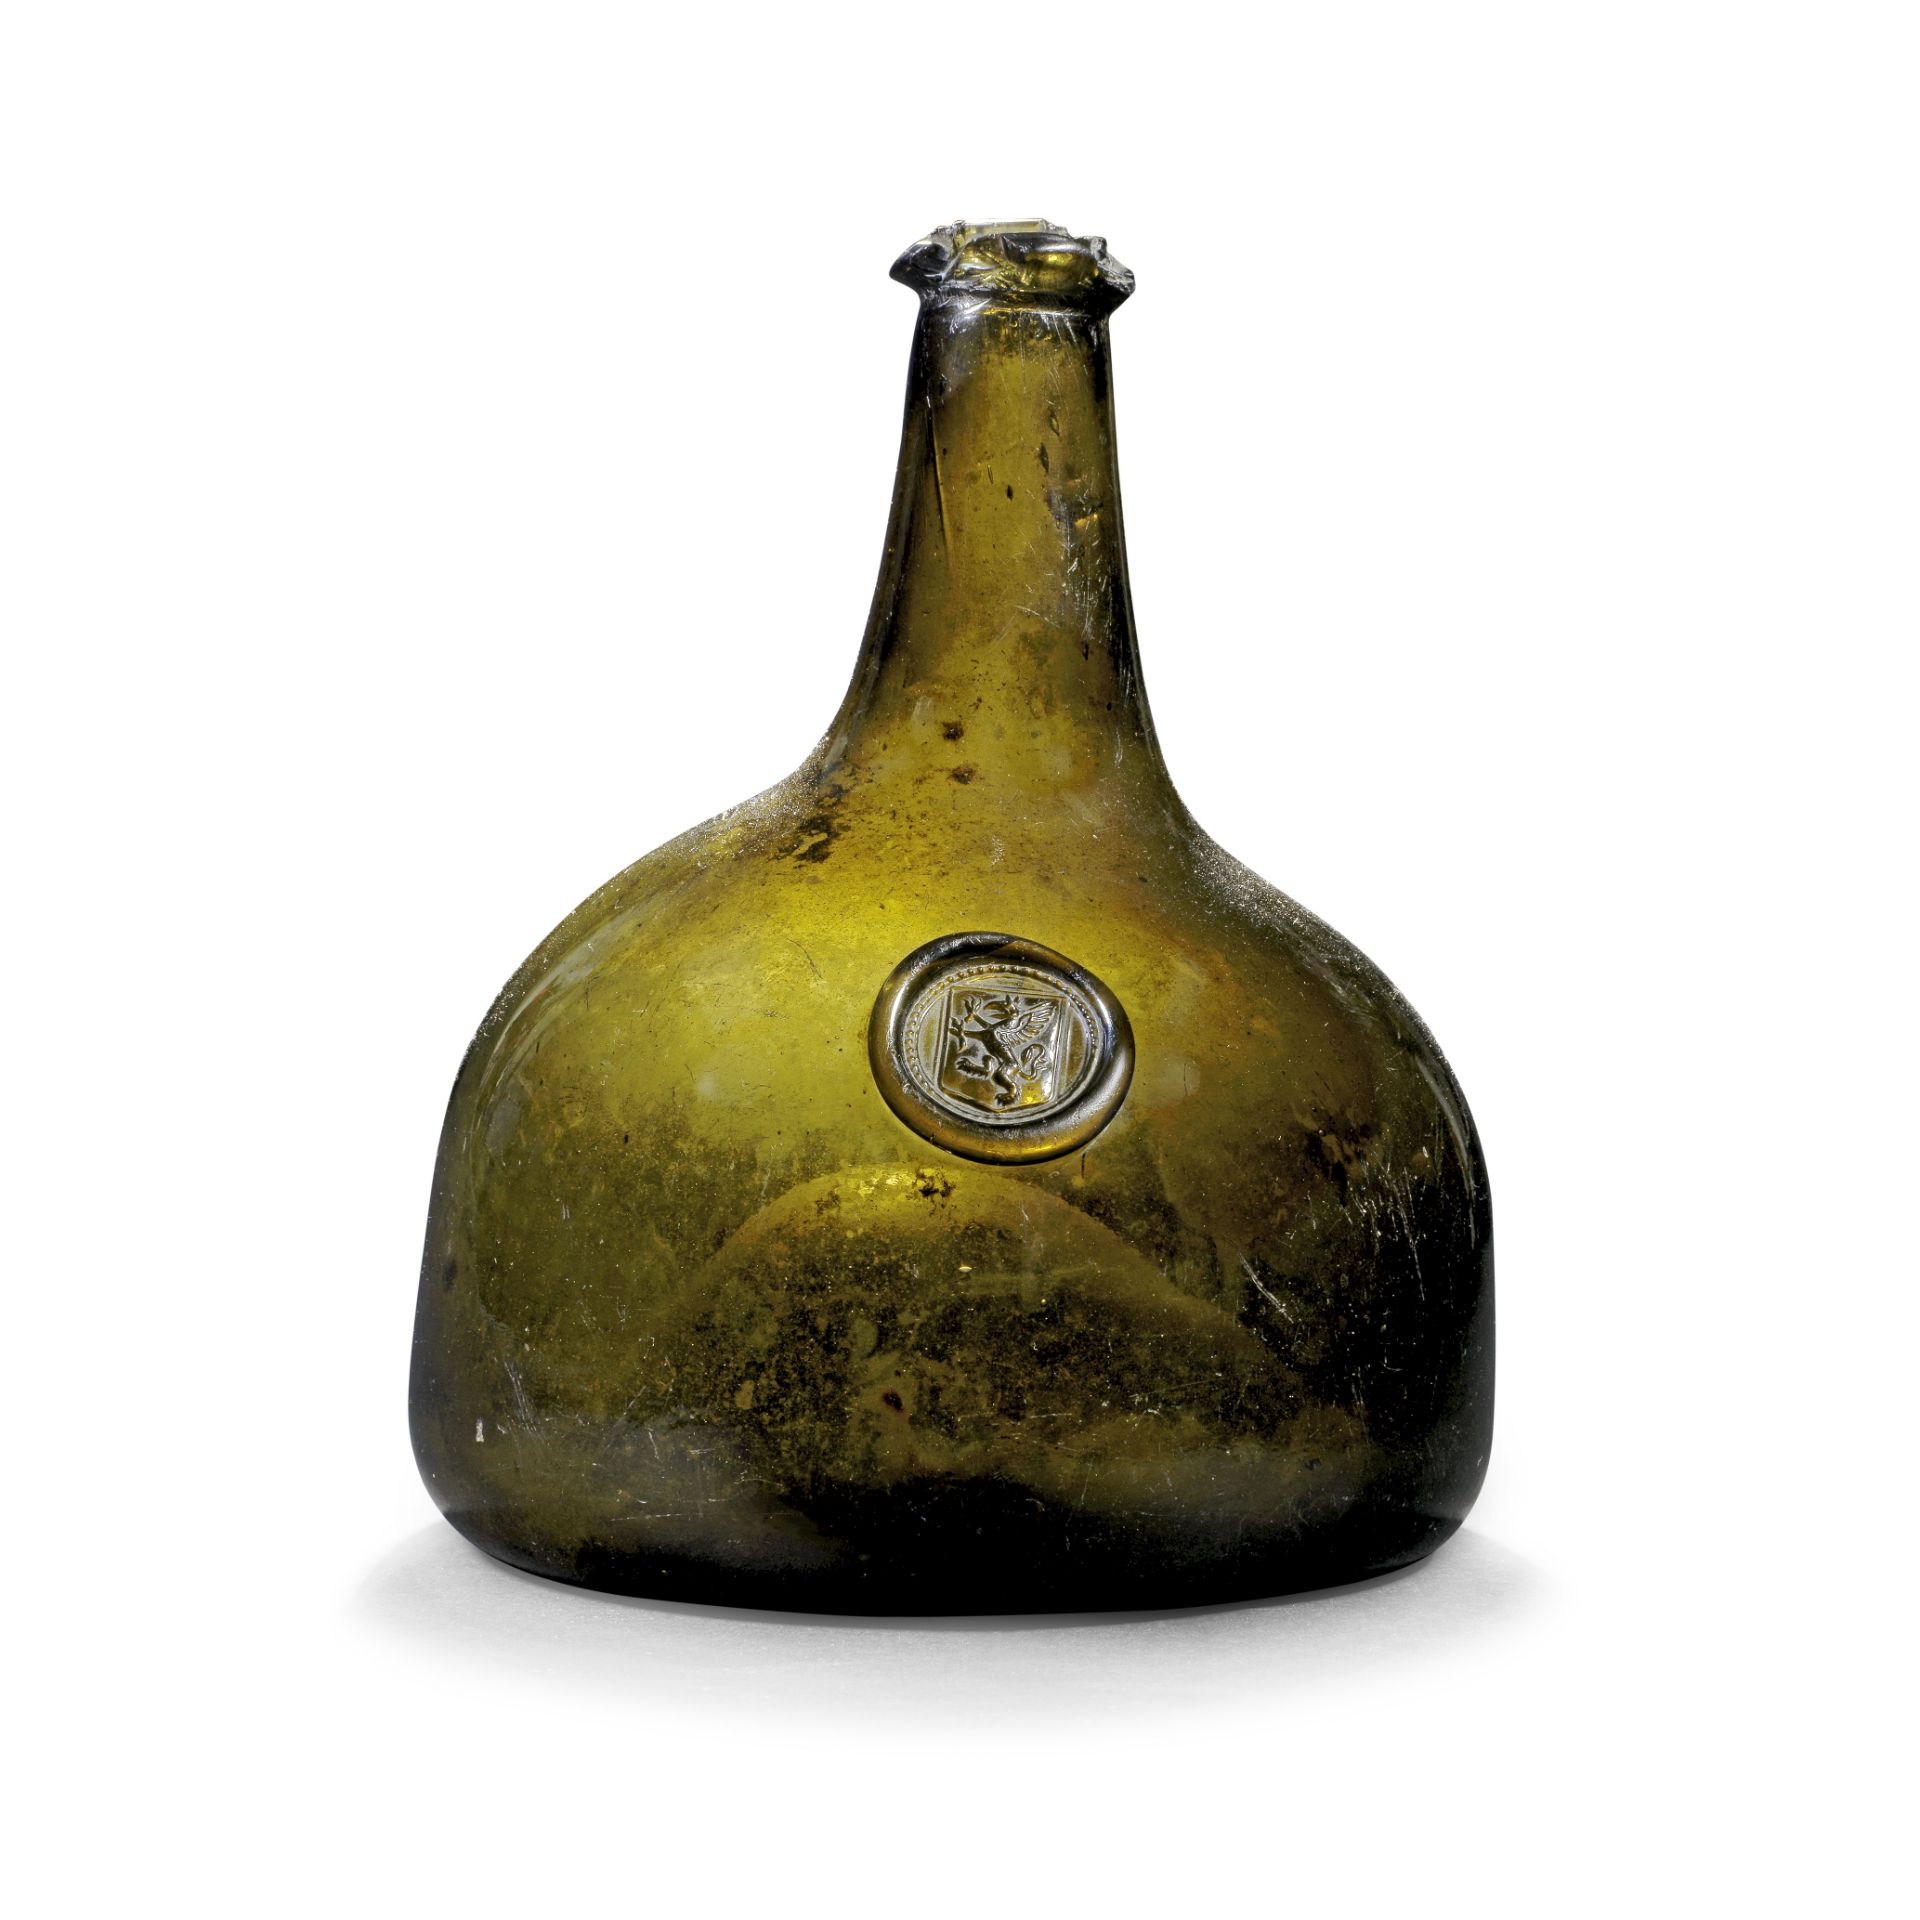 A rare sealed wine bottle, circa 1720-25